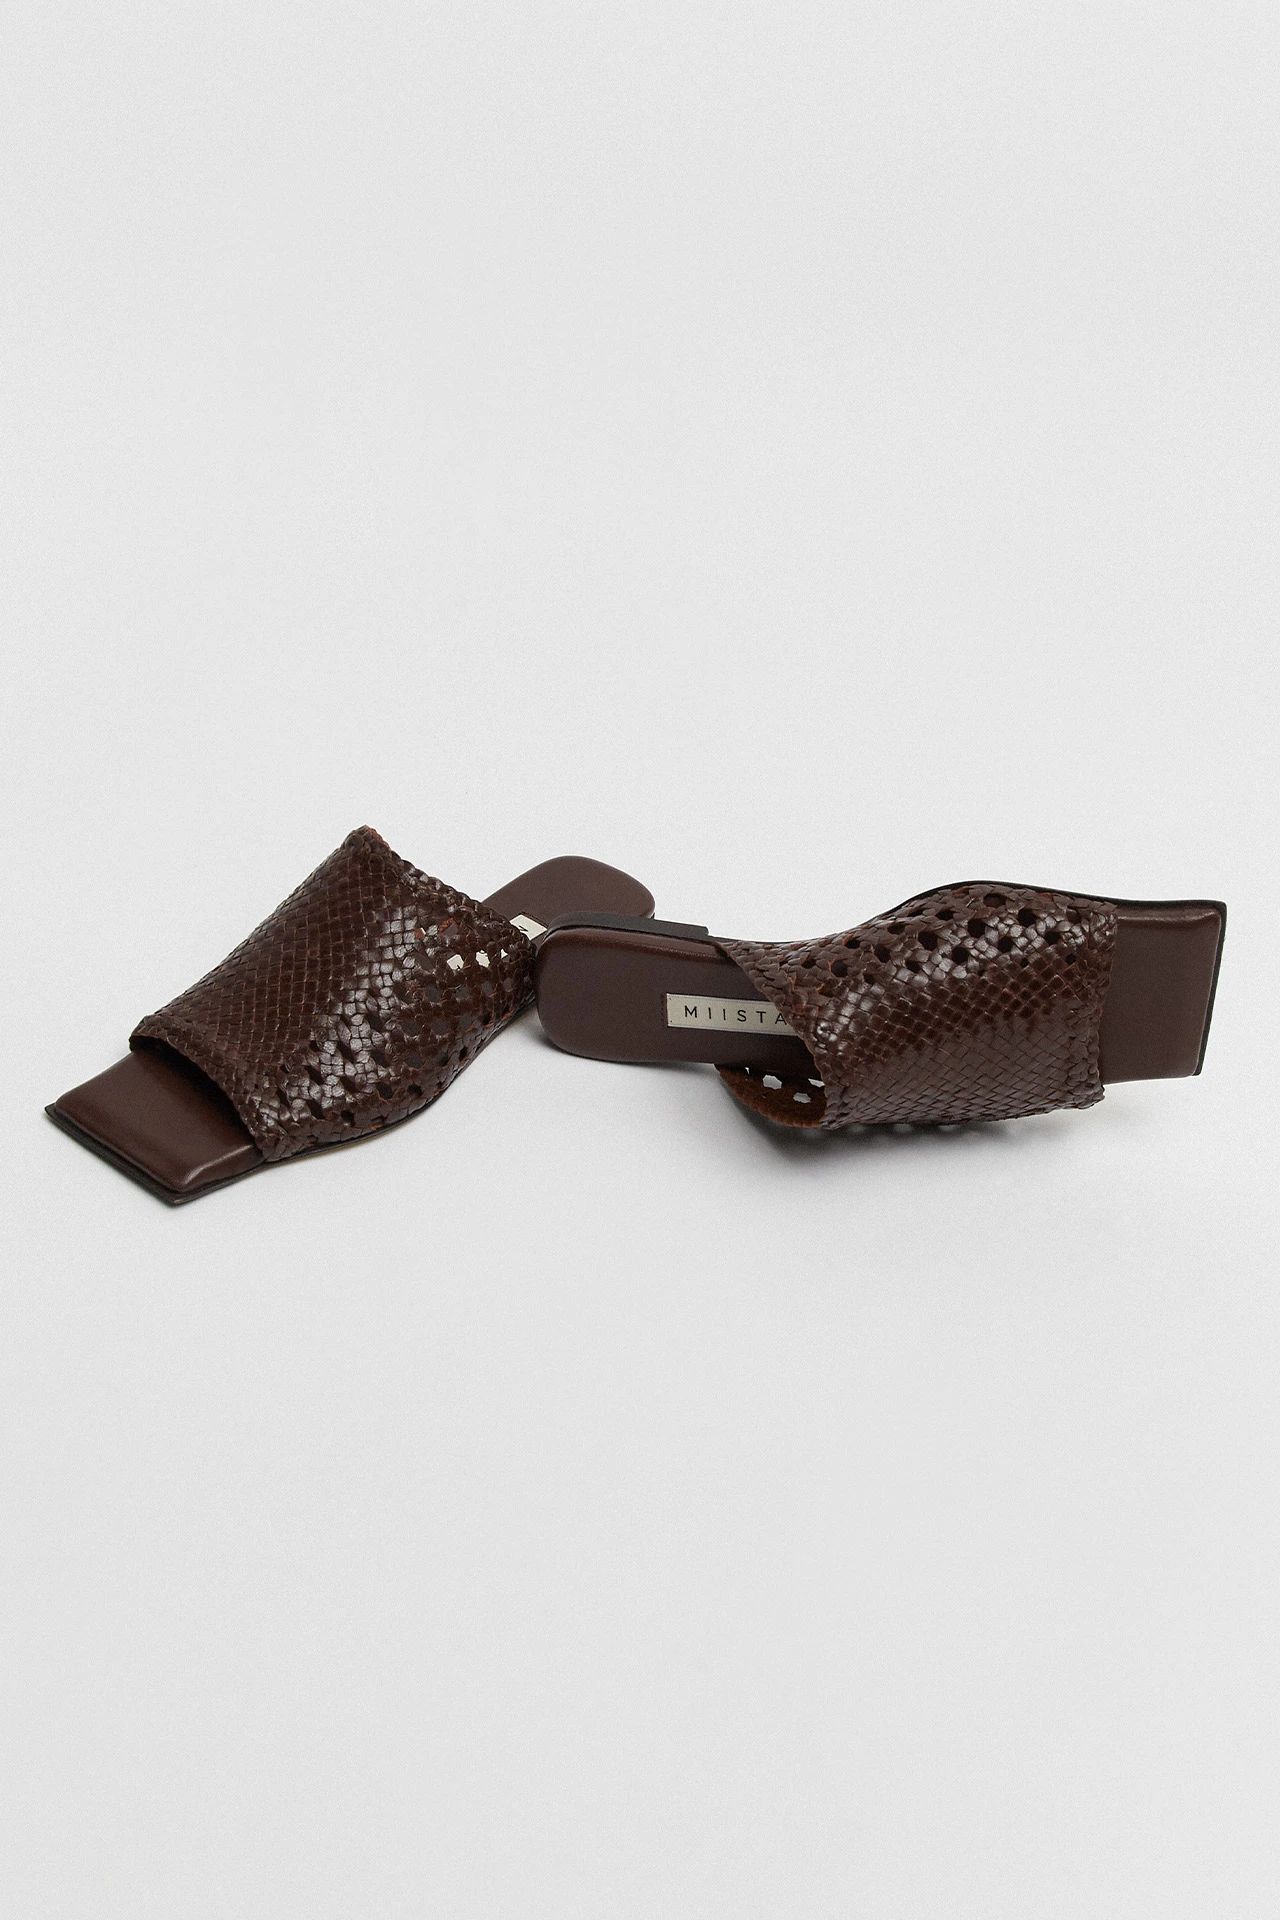 Miista-mayra-chocolate-brown-sandal-03